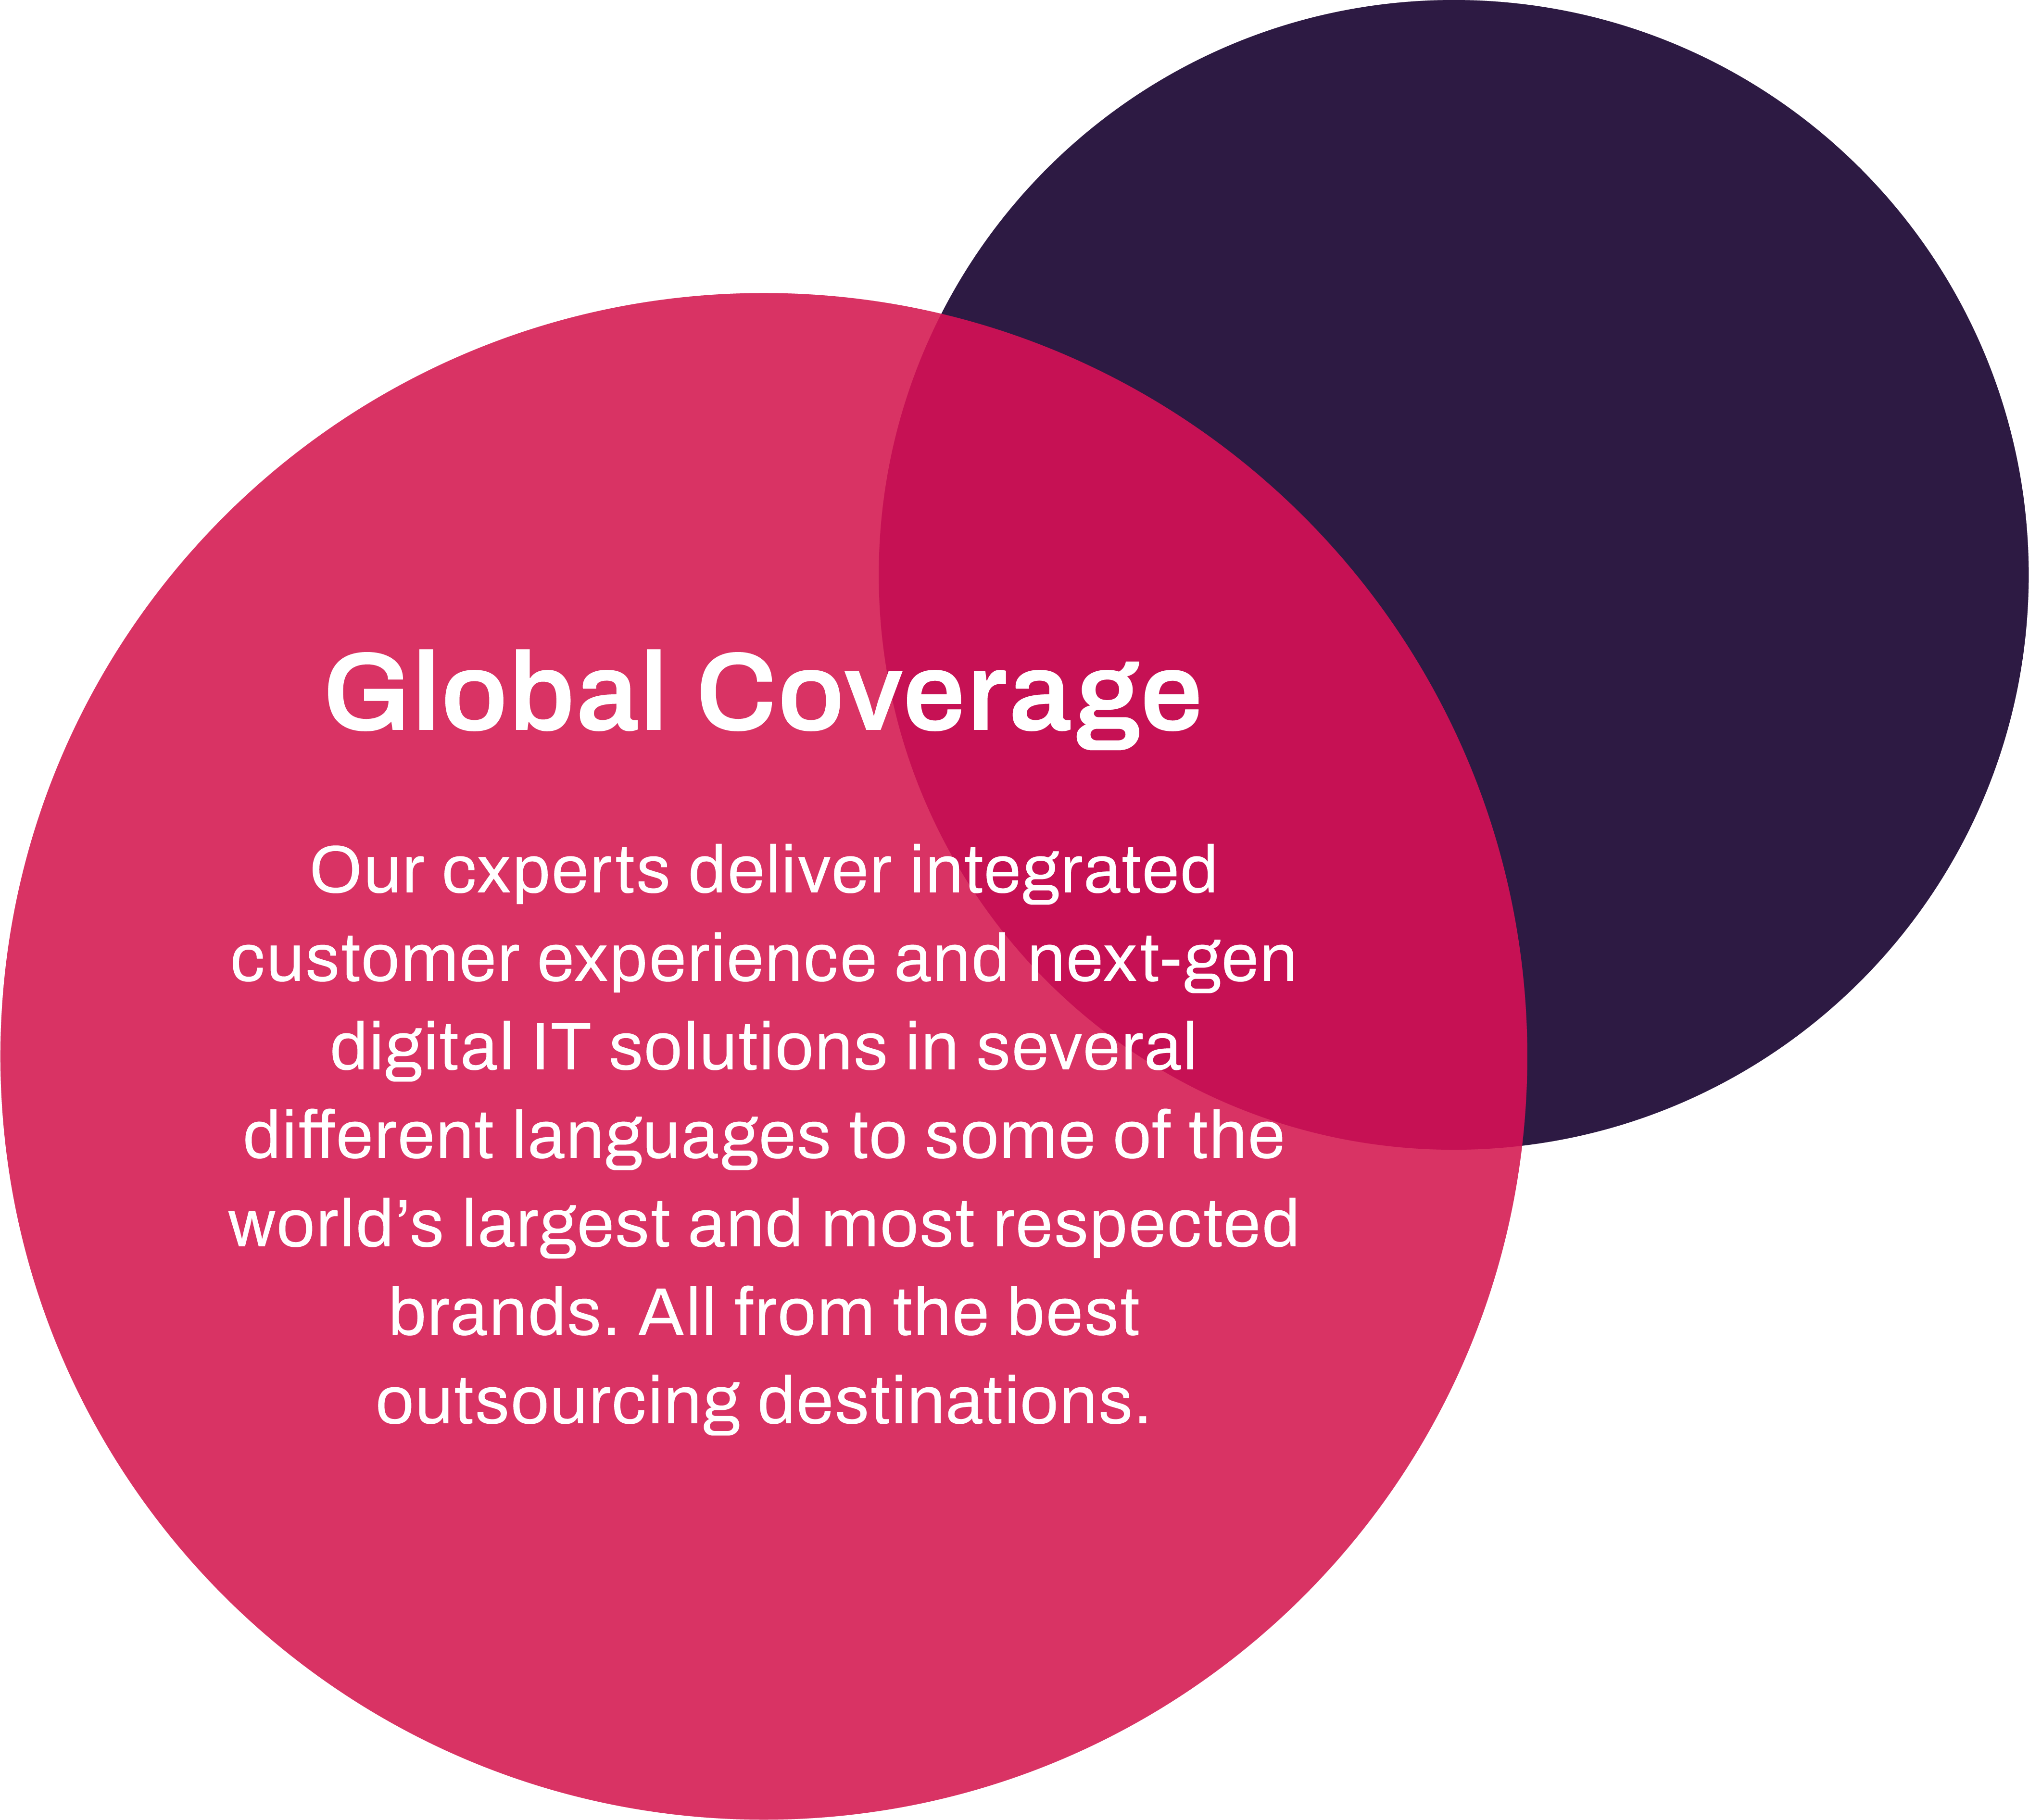 Global coverage image circle